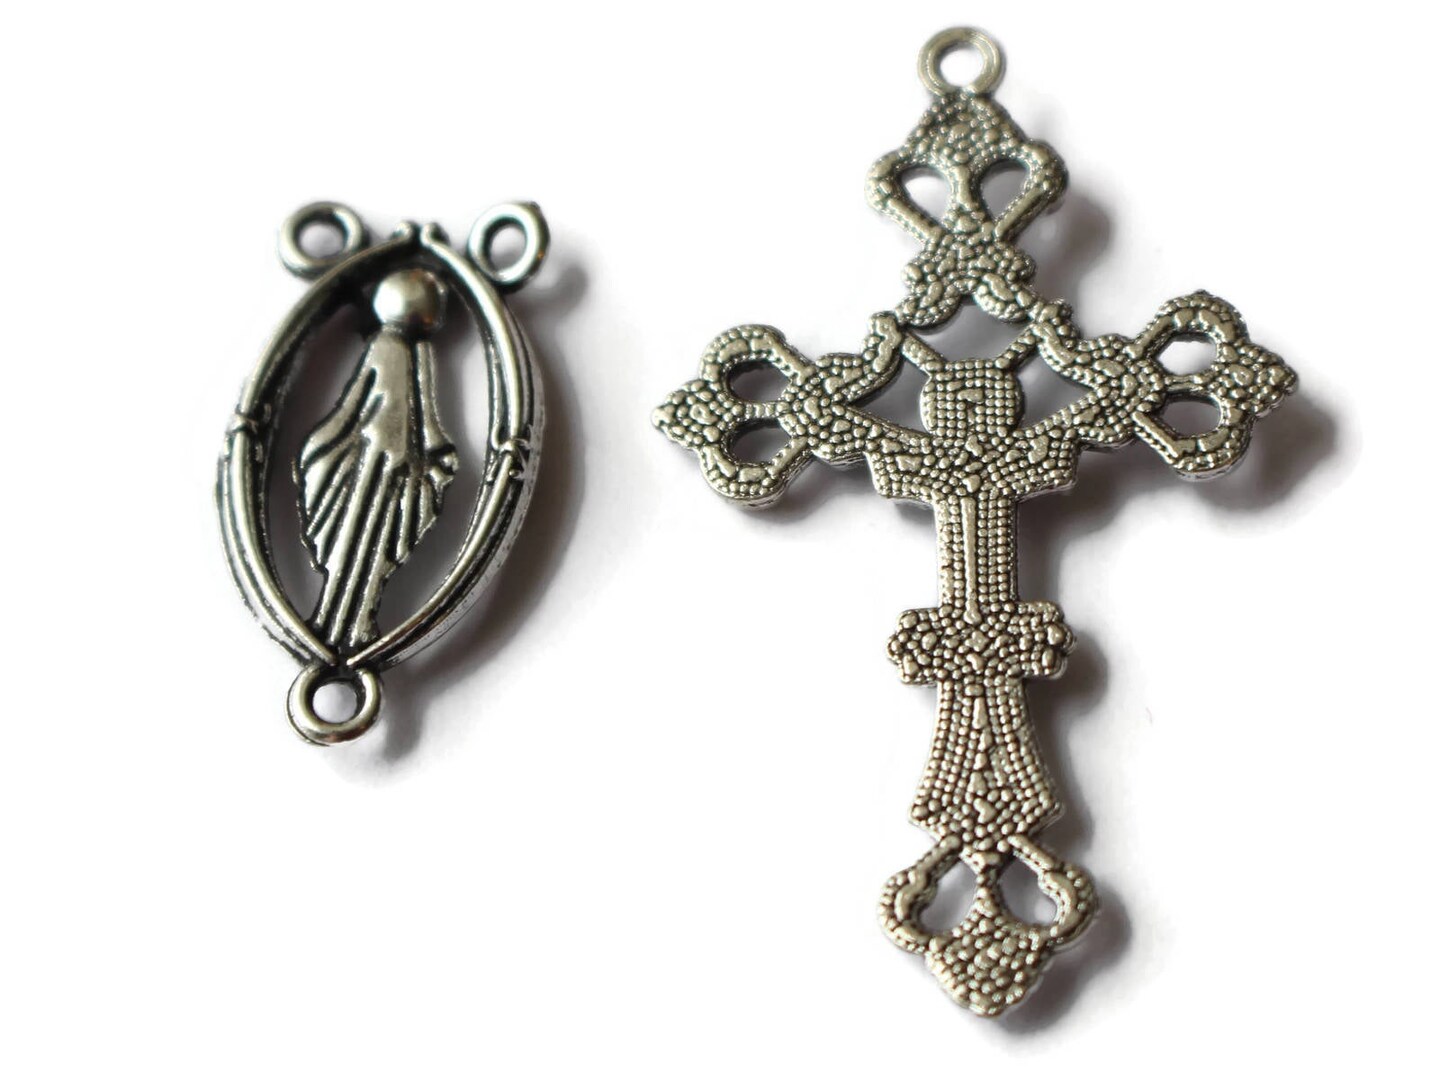 White Rhinestone Rosary Crucifix / Large BLUE Crucifix Pendant / 2 GREEN  Crucifix Cross / Silver Rosary Parts DIY Rosary Making Supplies 